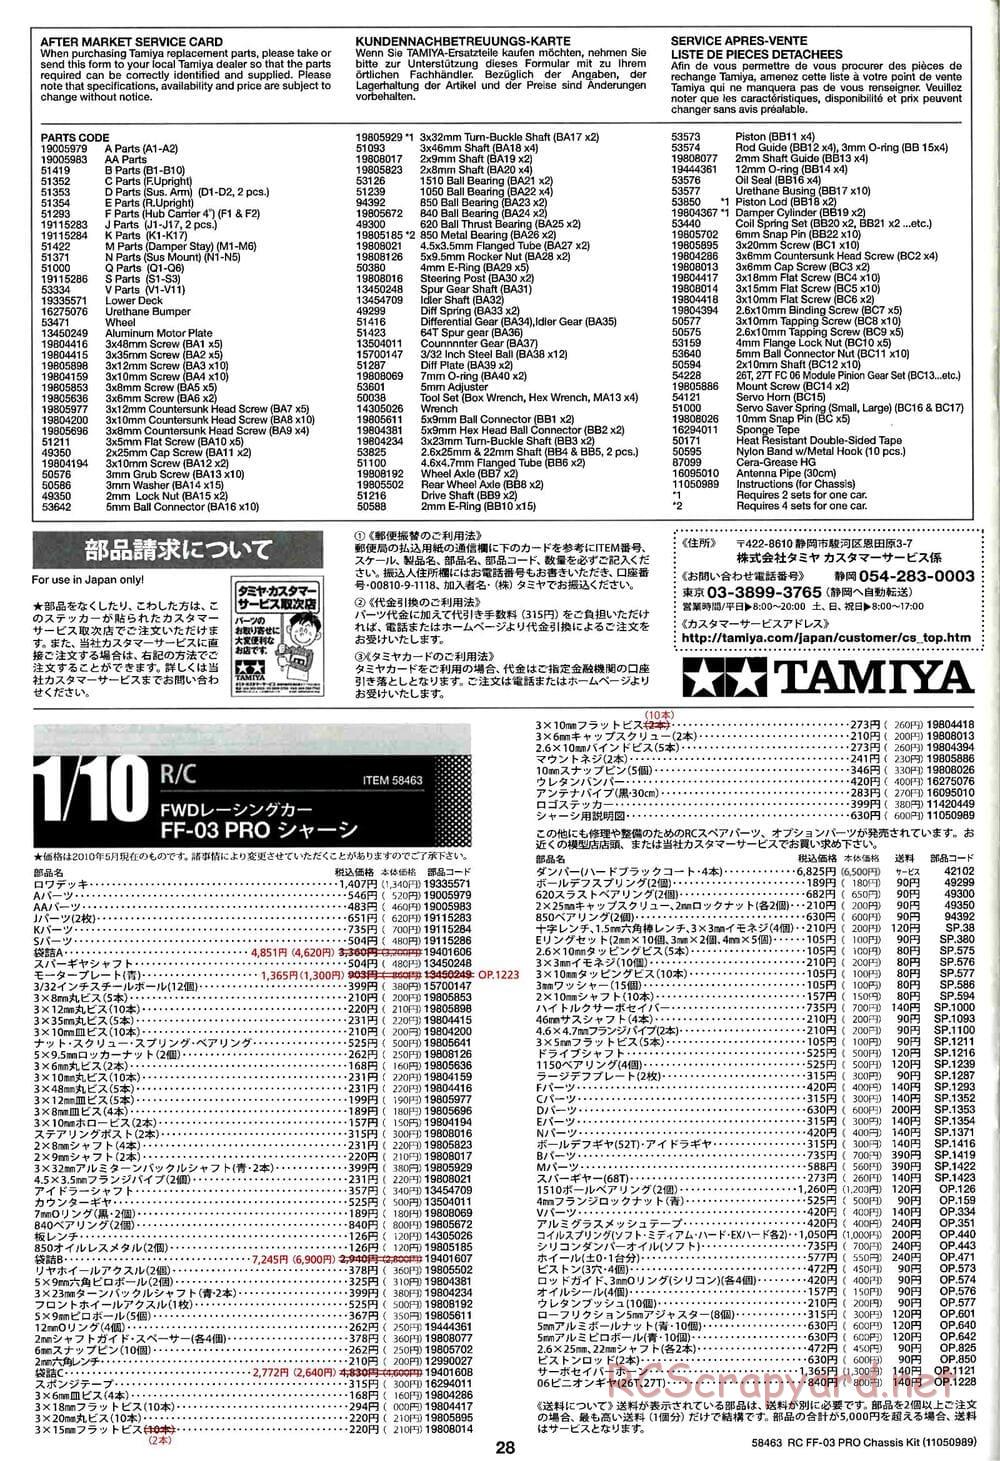 Tamiya - FF-03 Pro Chassis - Manual - Page 28